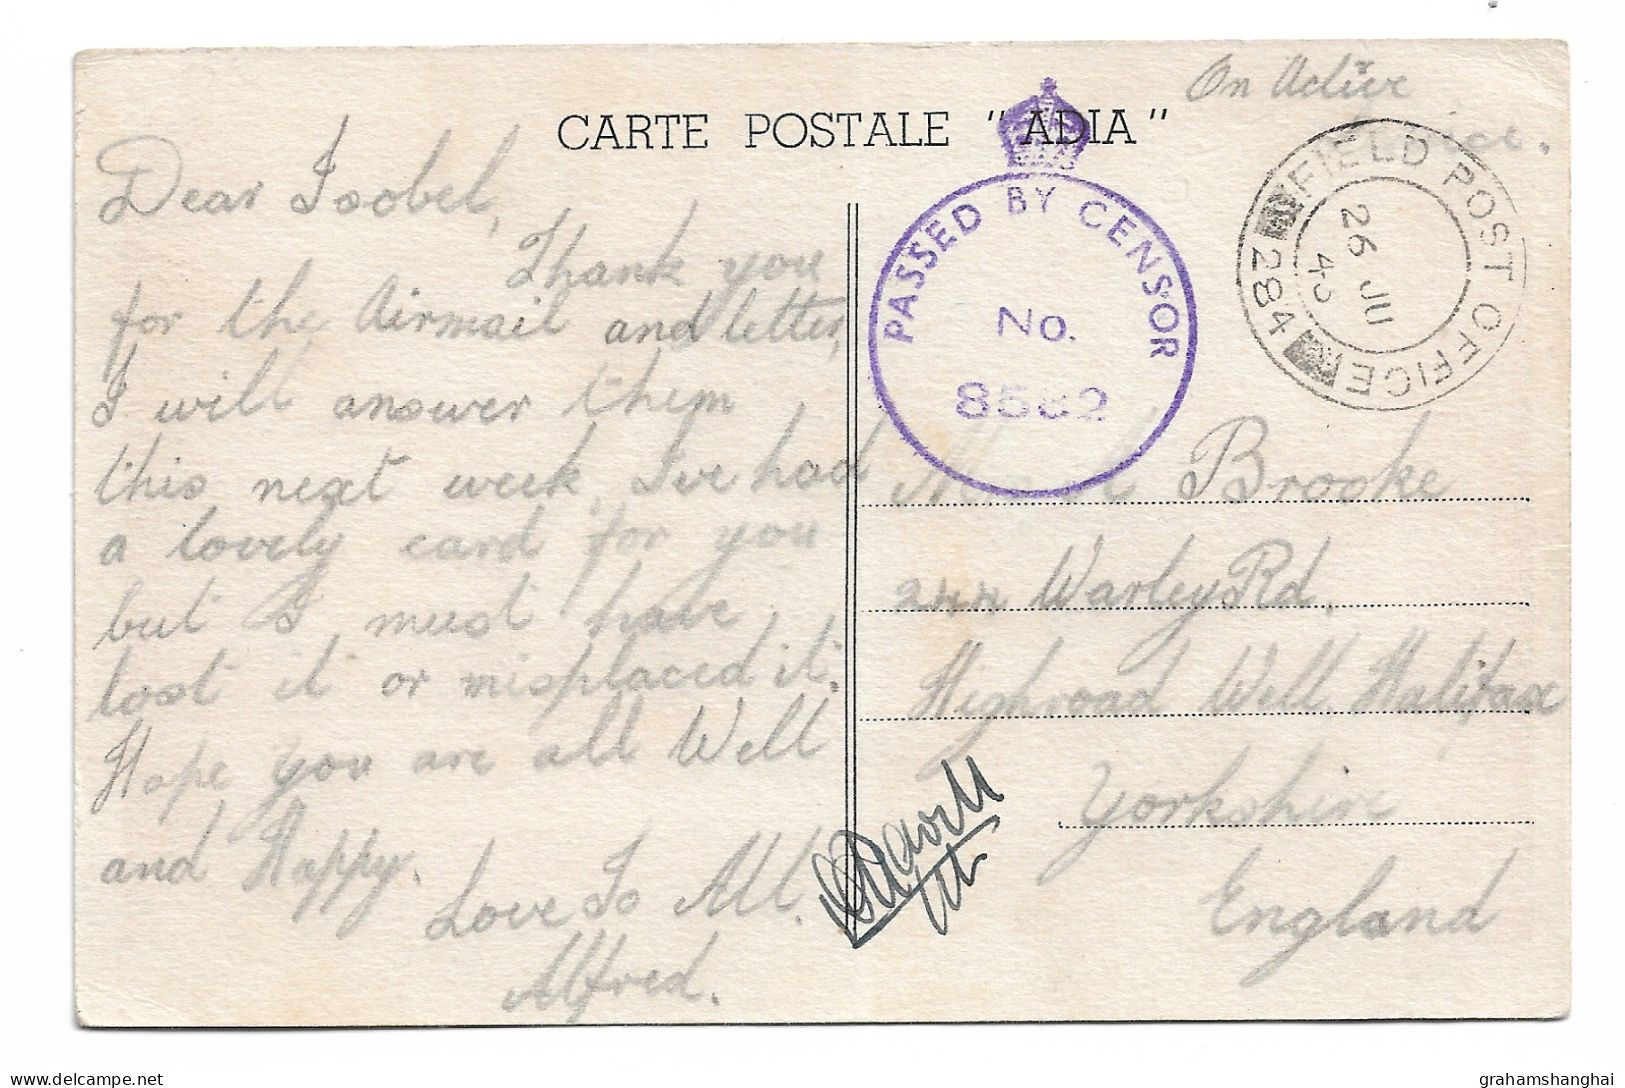 Postcard Algeria Bourfarik 1943 British Army Field Post Office FPO284 46 Infantry Division WW2 Alfred Brooke Halifax - Weltkrieg 1939-45